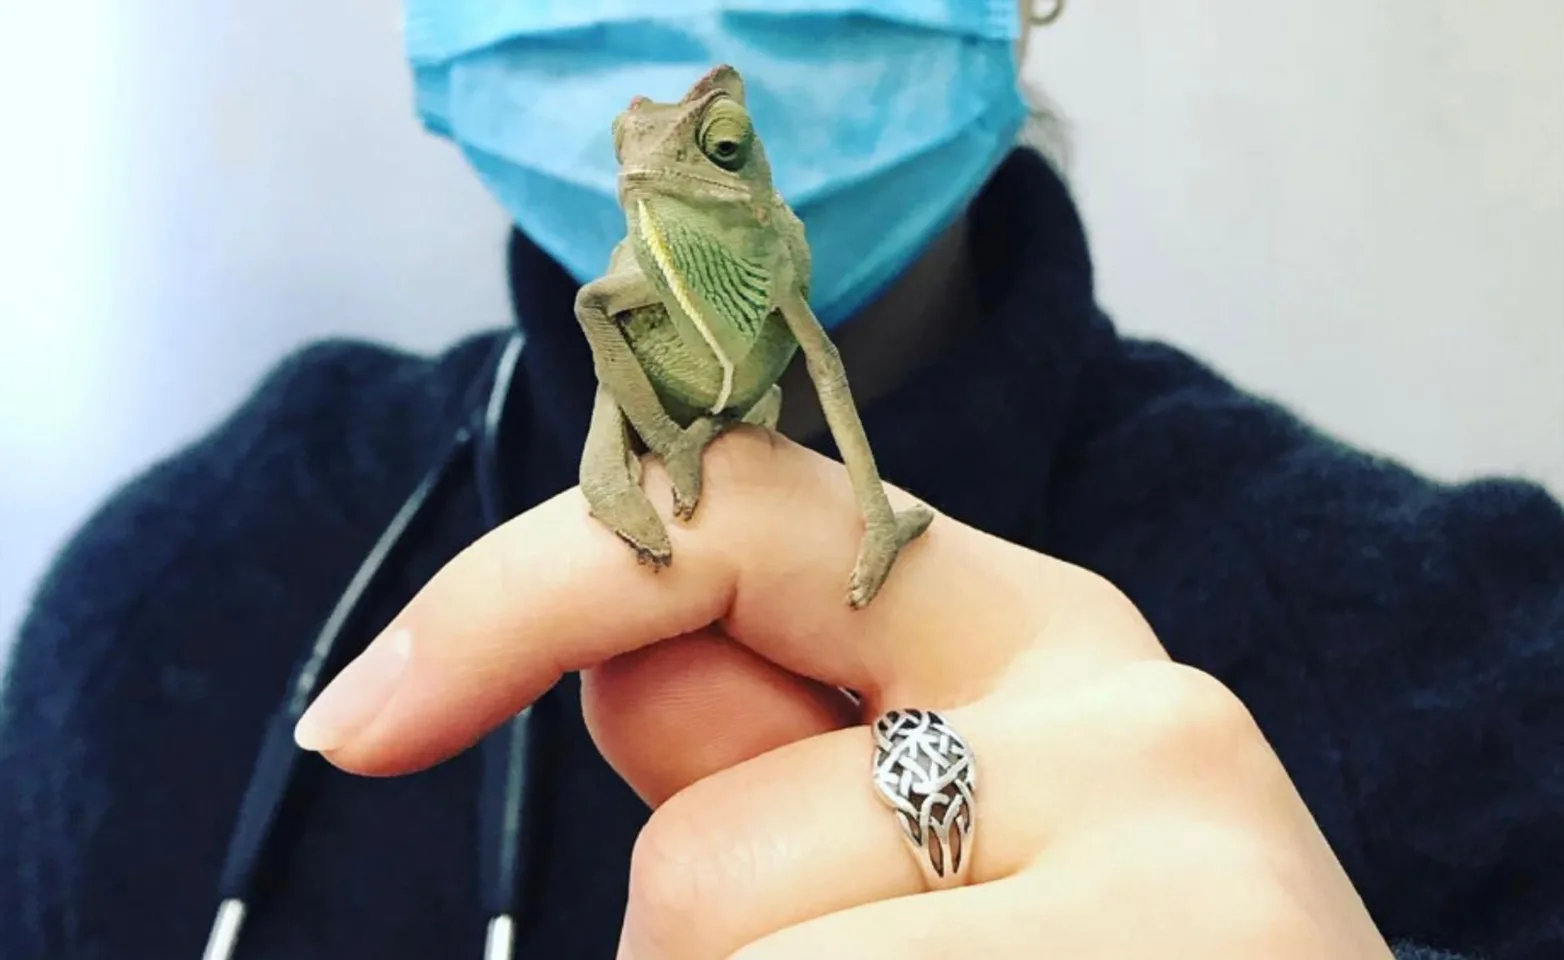 Doctor with mask on holding green chameleon on her finger